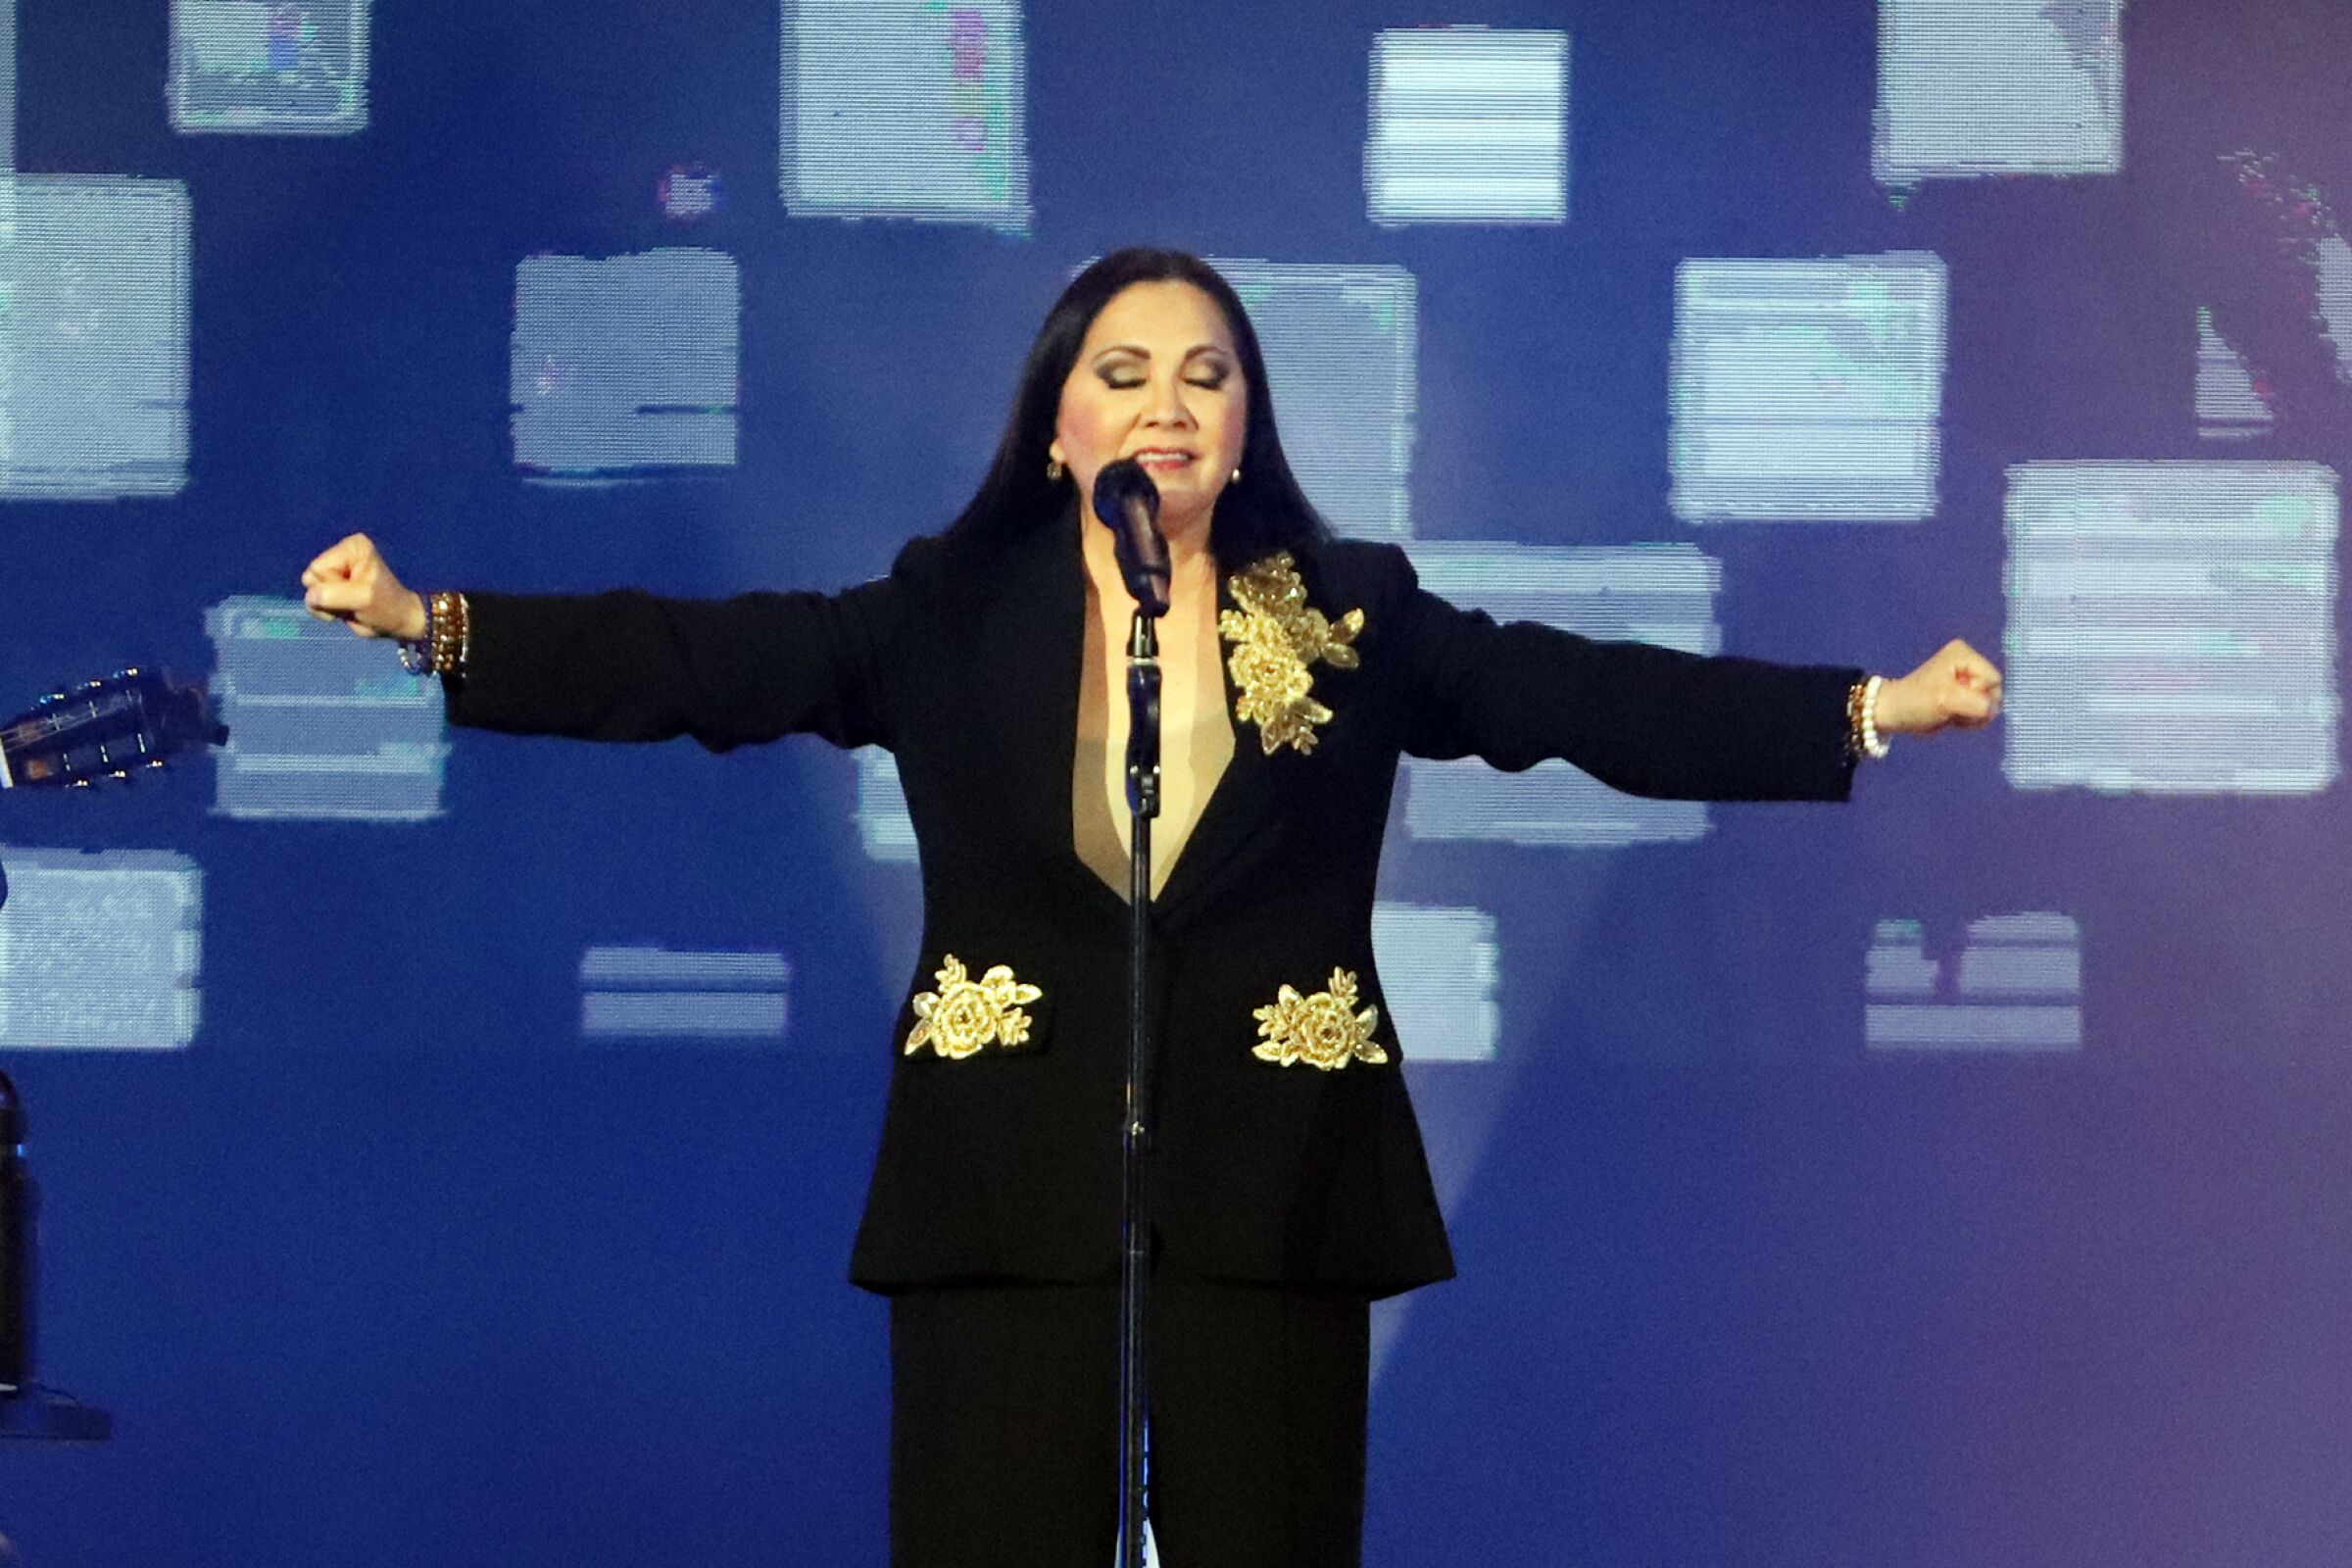 La cantante y compositora mexicana Ana Gabriel se presenta durante su gira 